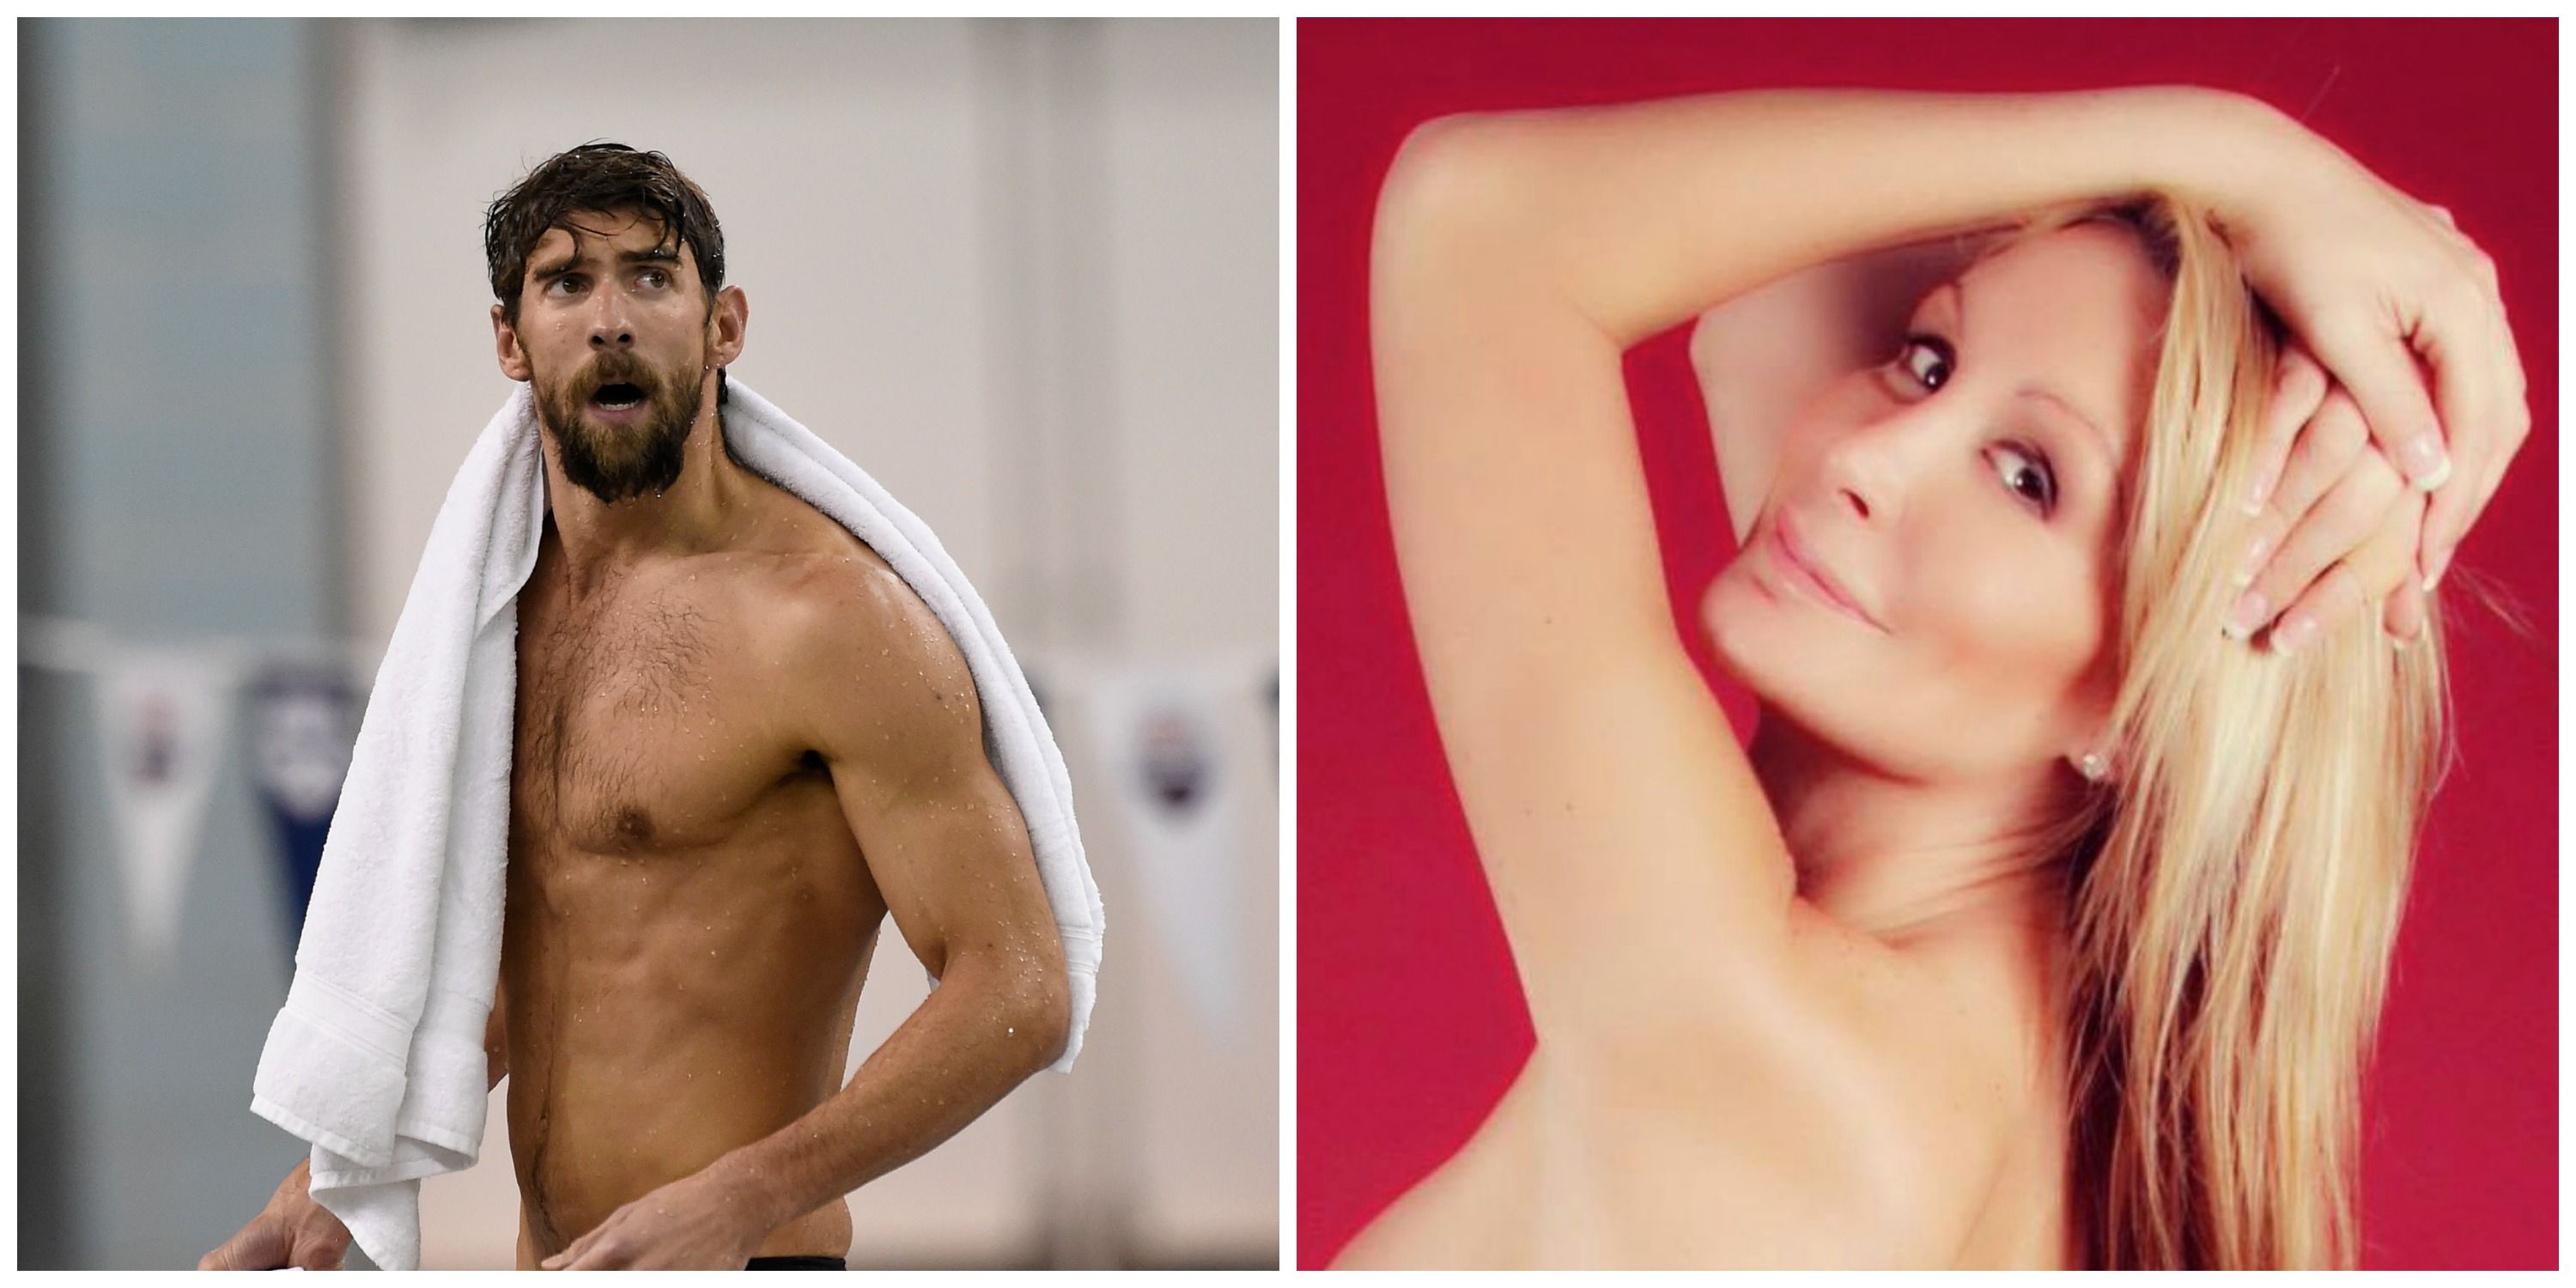 Michael Phelps transgender ex-girlfriend has labelled him worse than Charlie Sheen image